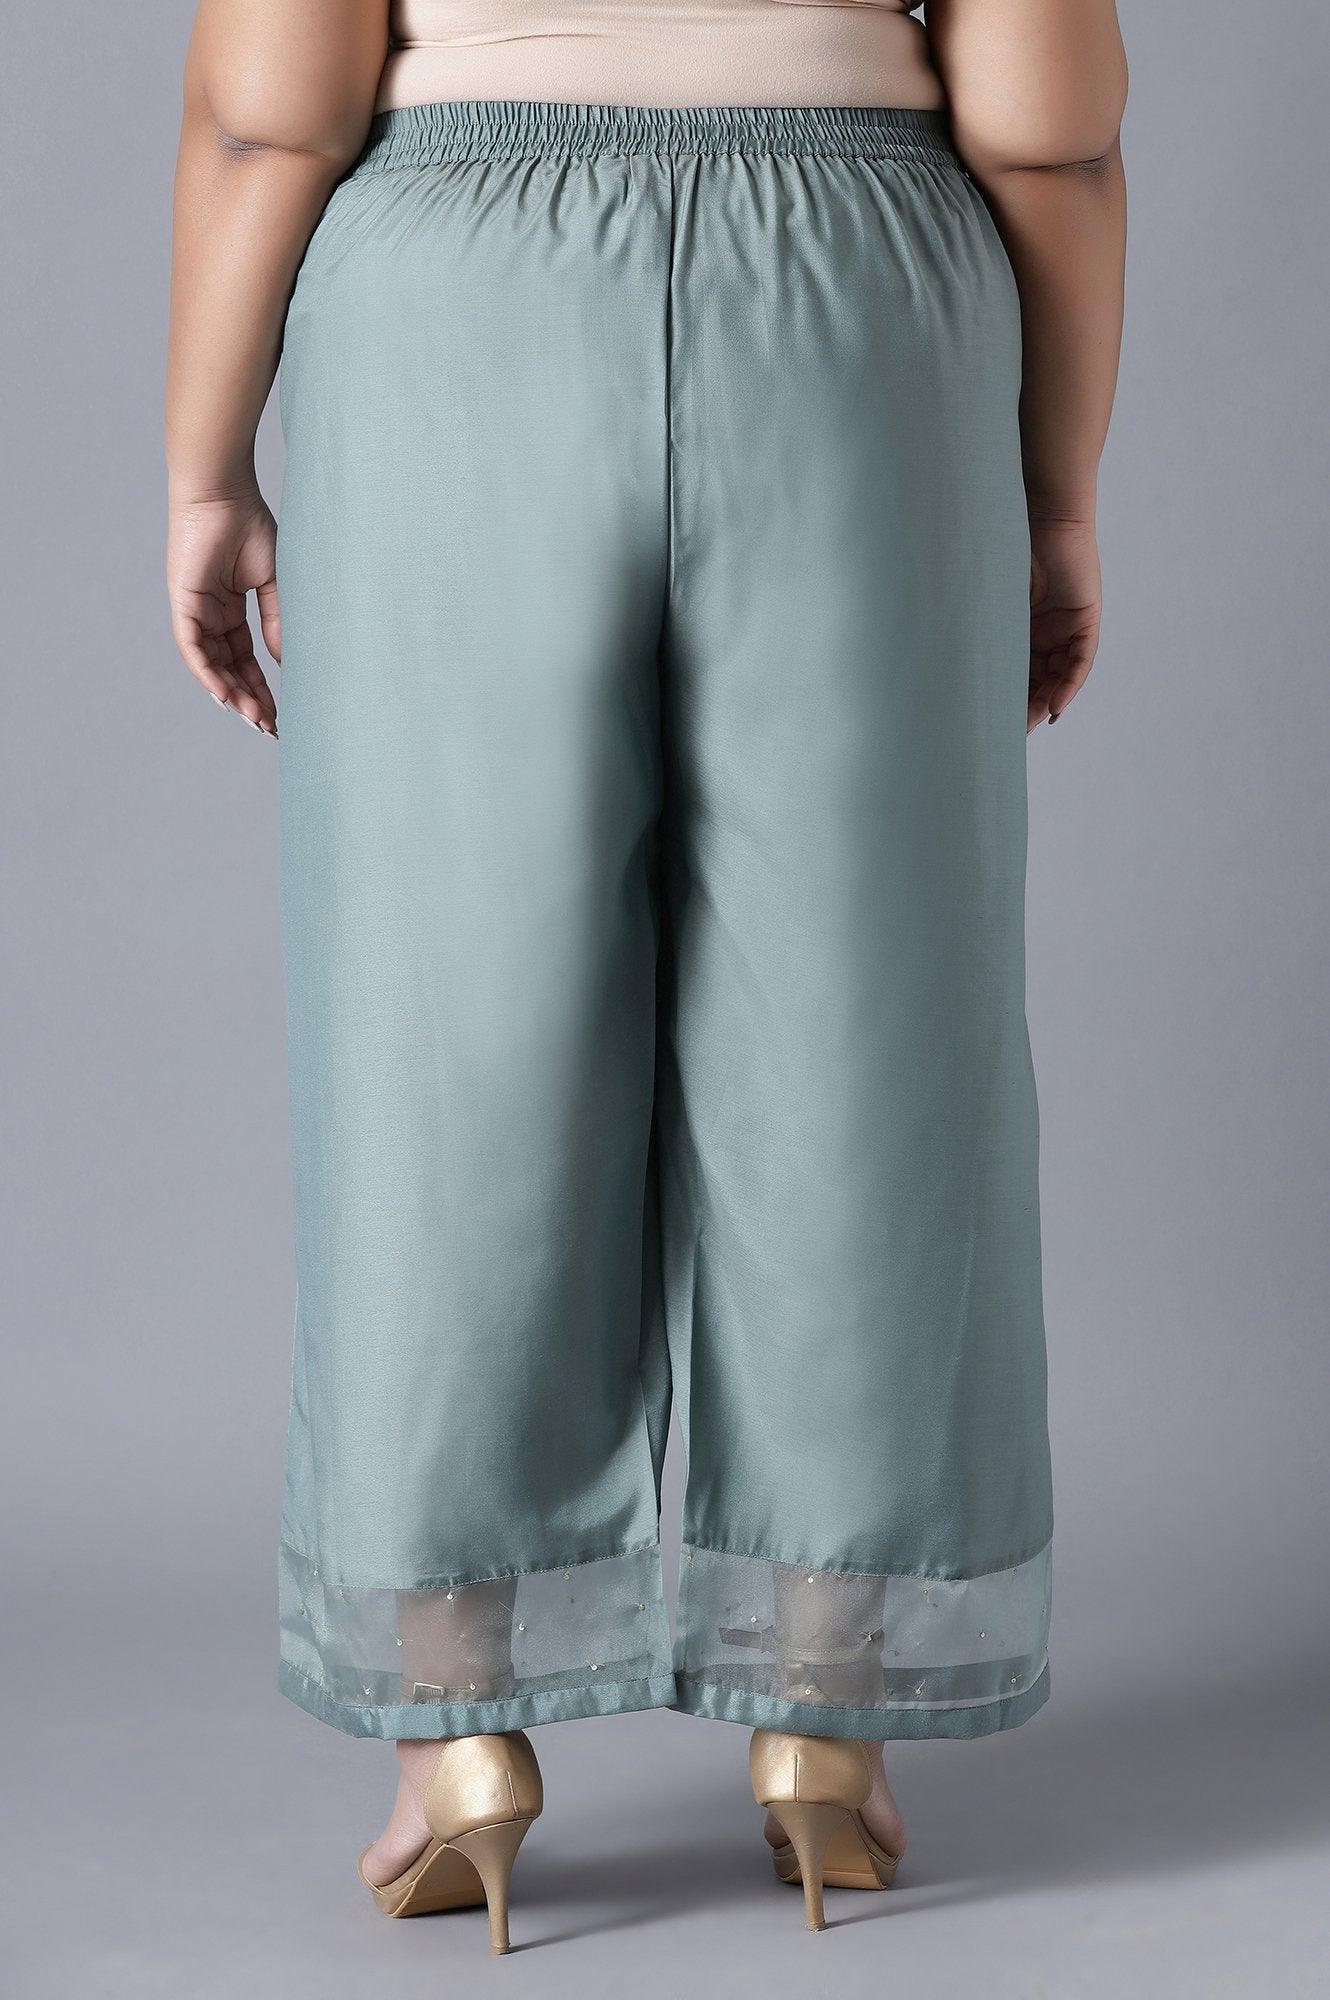 Sea Green Solid Parallel Pants - wforwoman